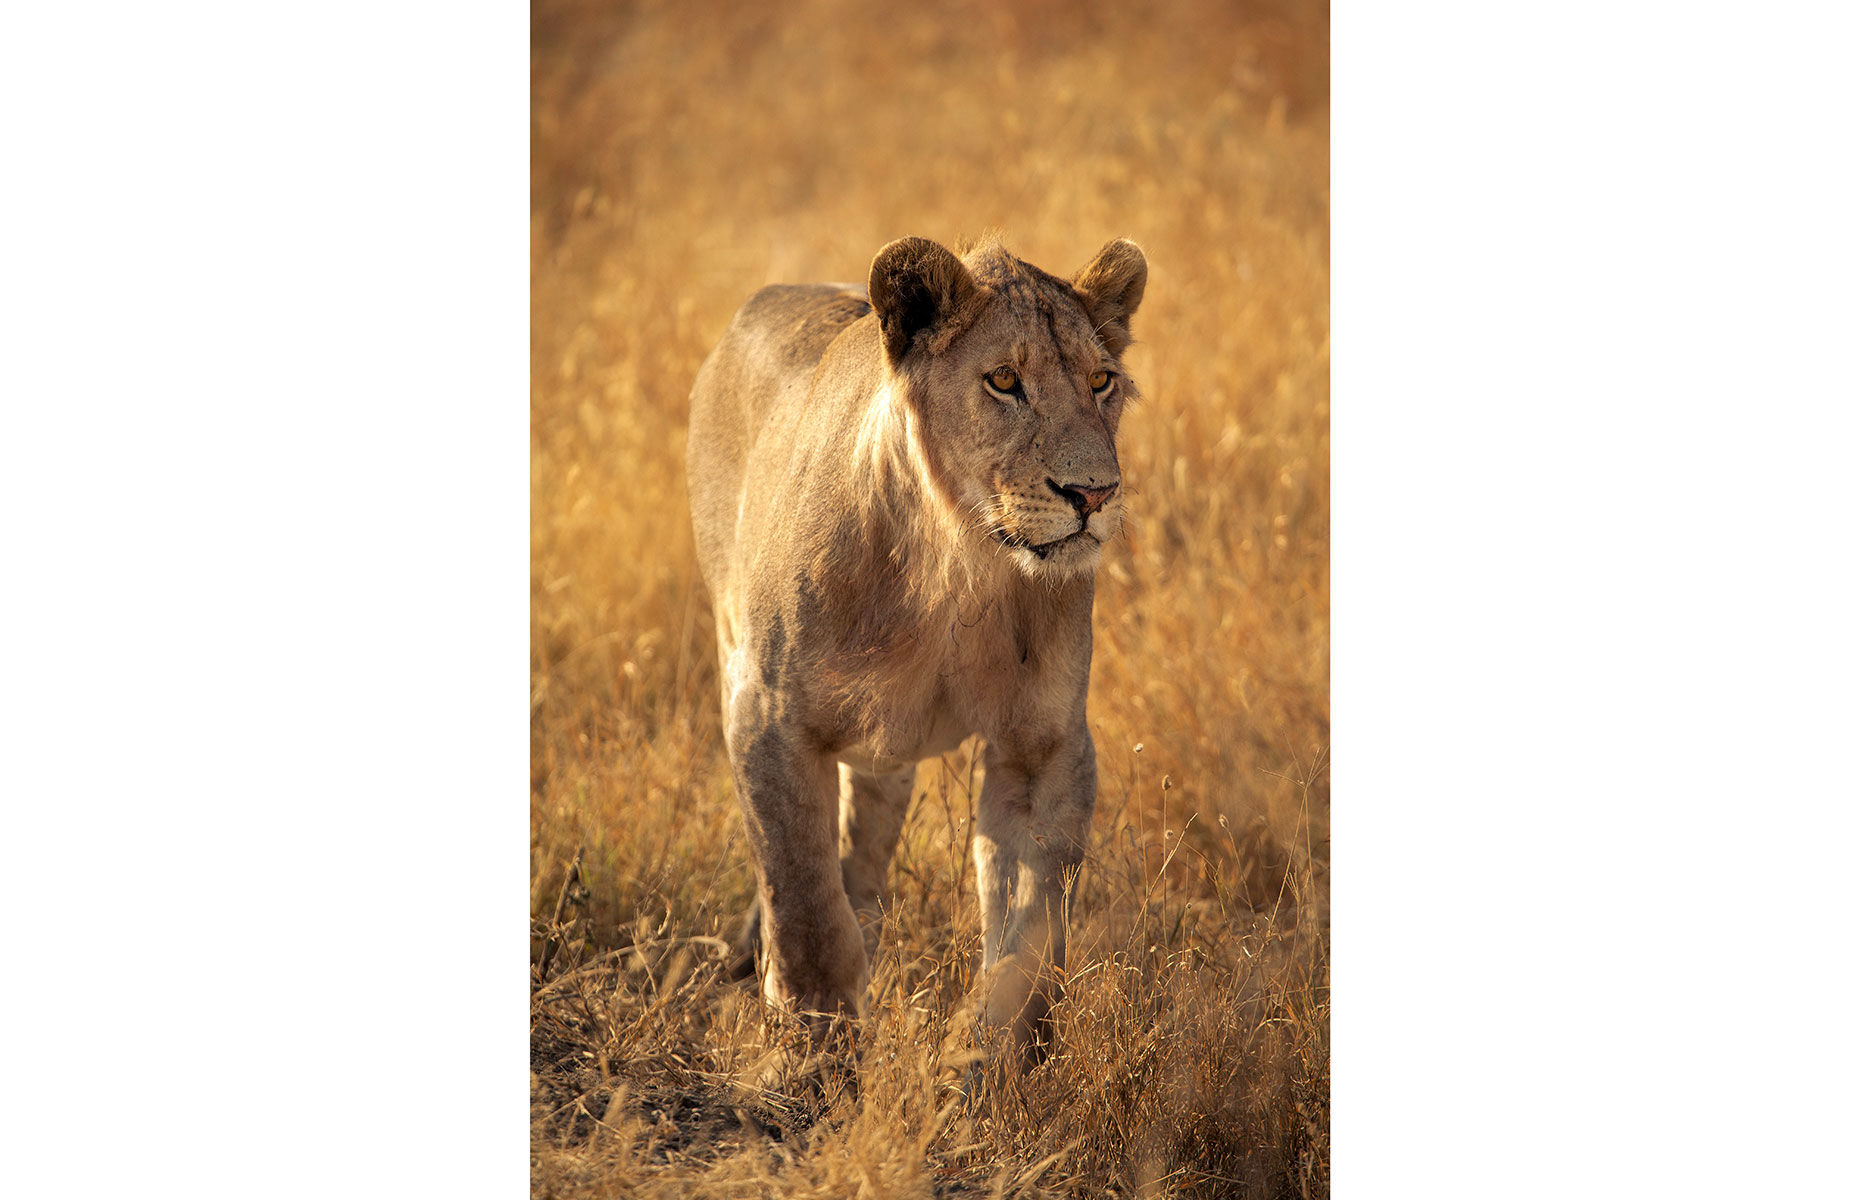 Lioness in the Serengeti (Image: Copyright Nori Jemil)